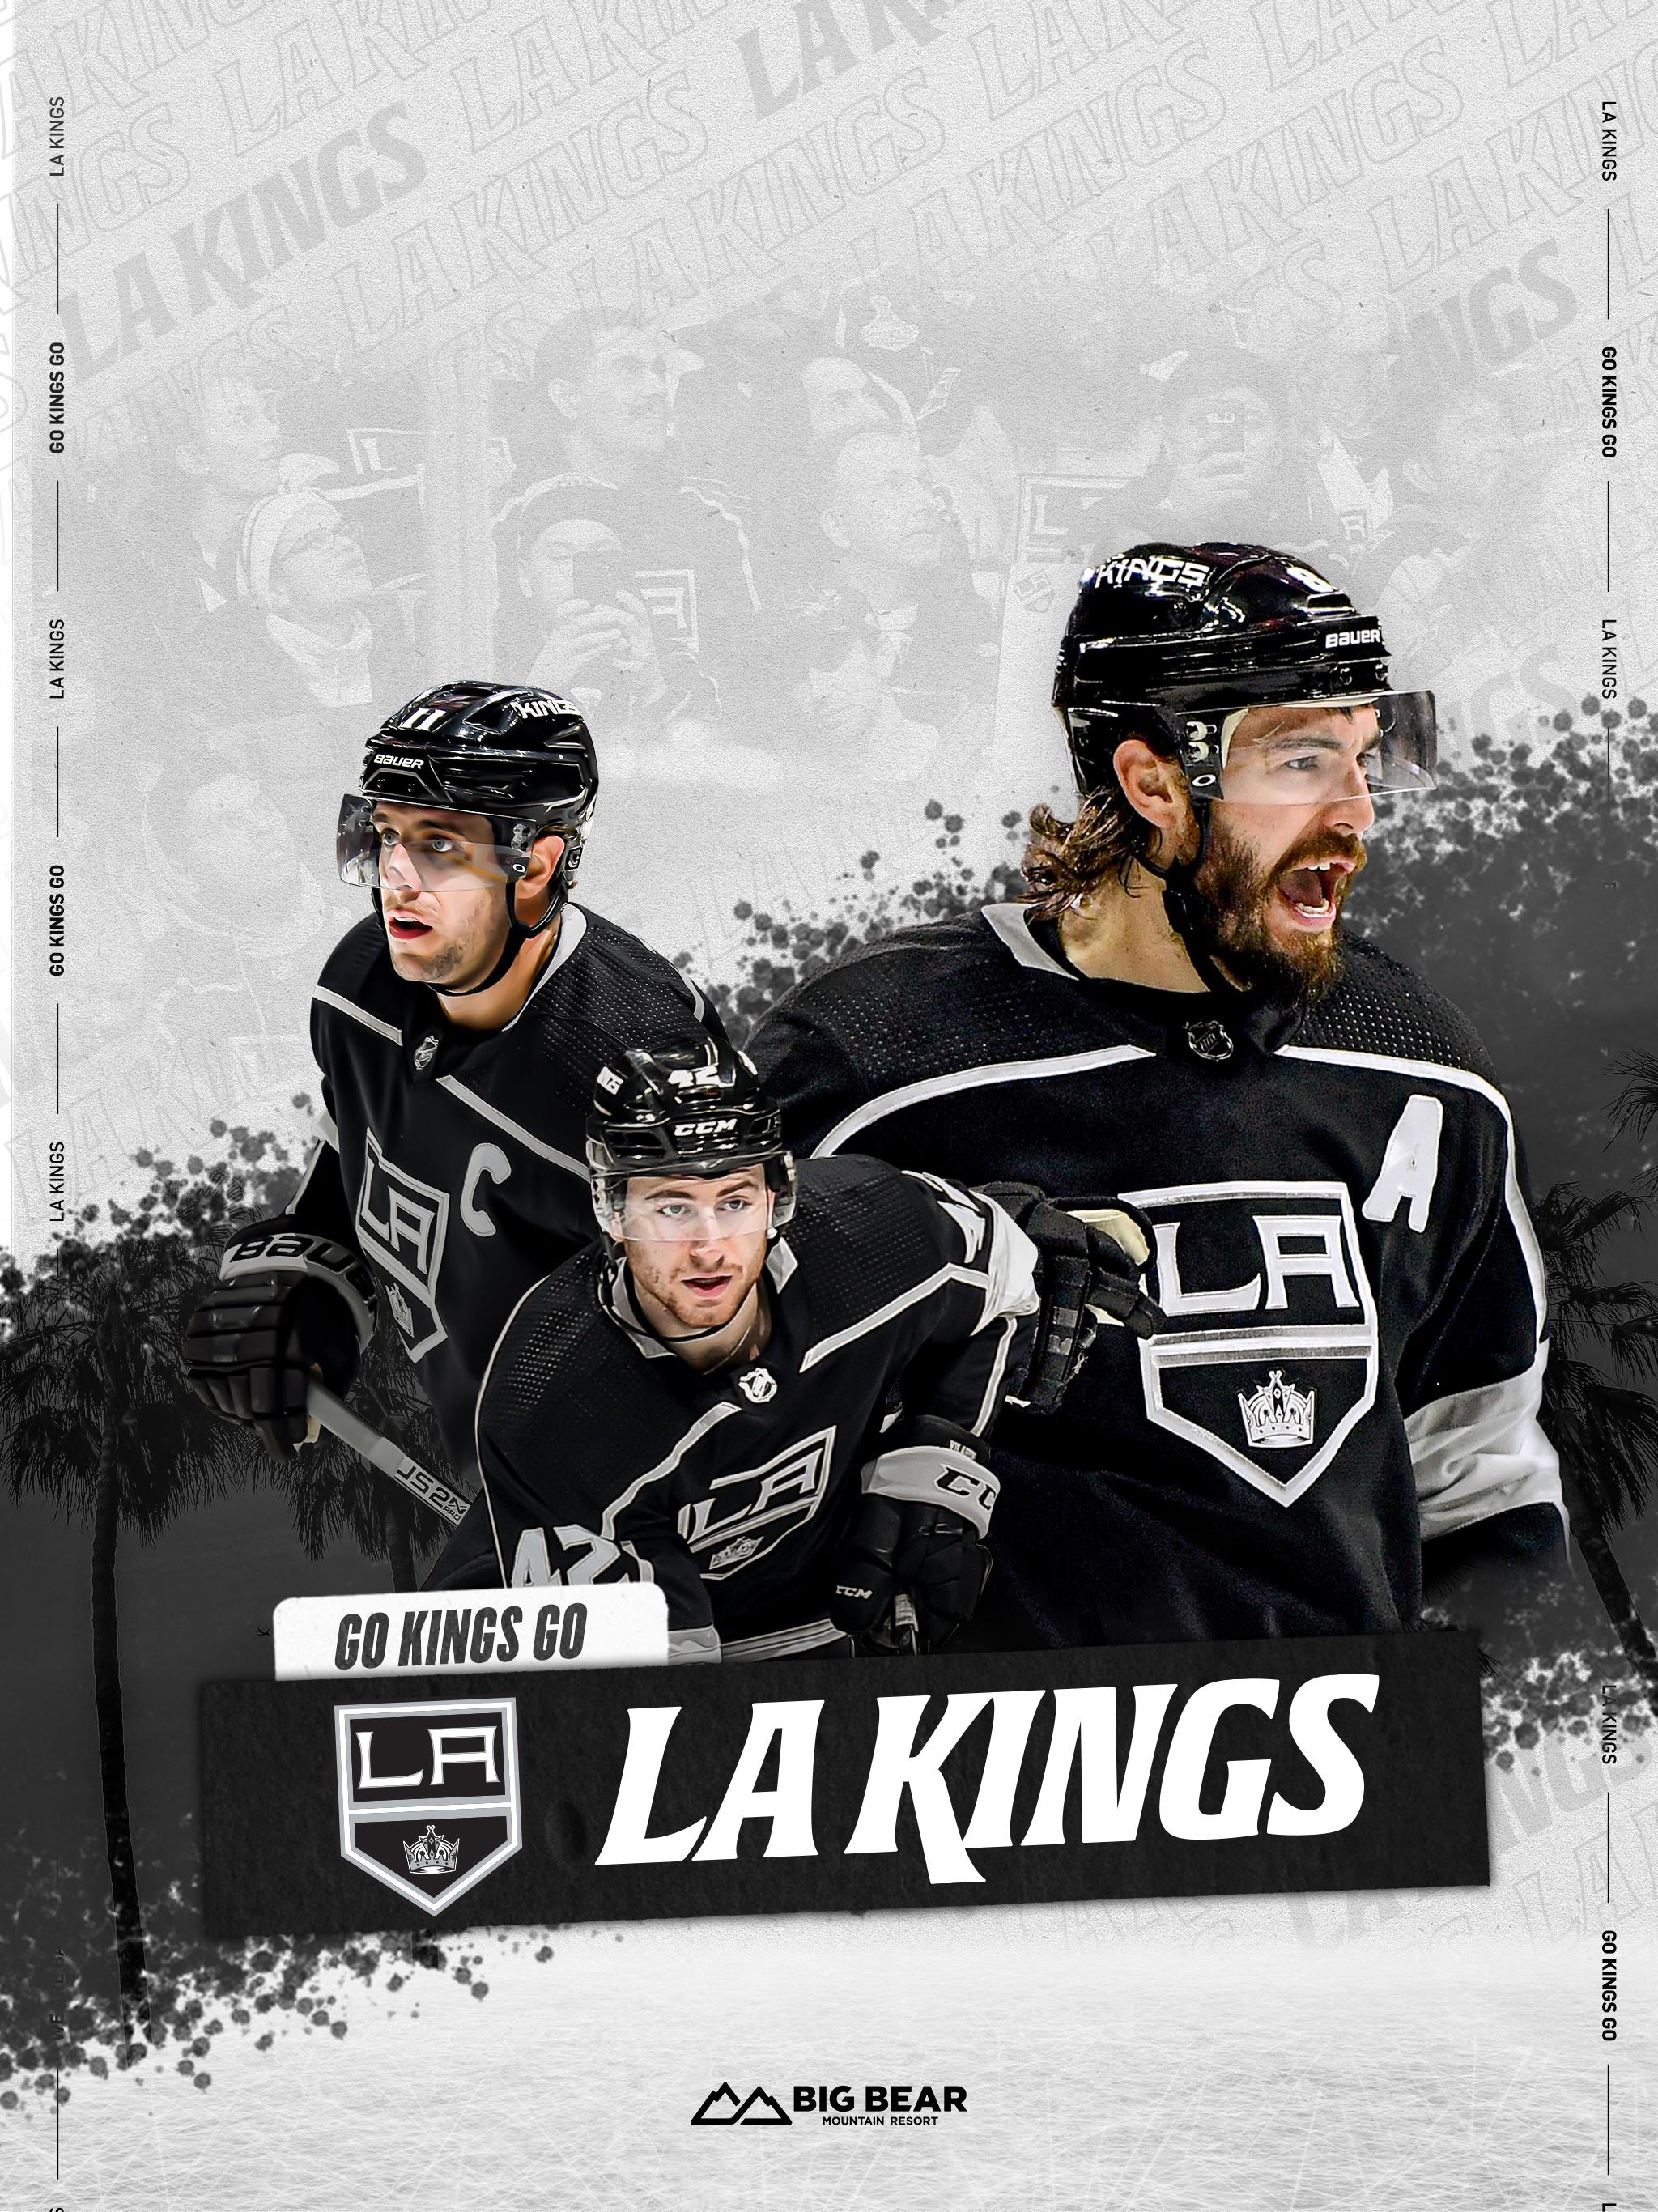 LA Kings iPhone Wallpapers - Top Free LA Kings iPhone Backgrounds